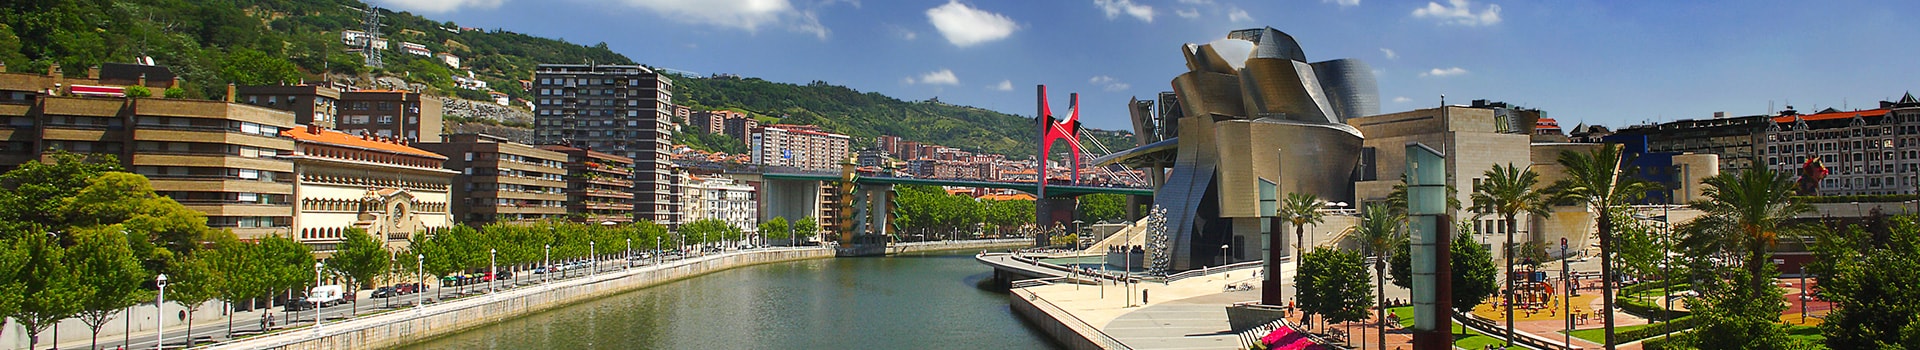 Málaga - Bilbao